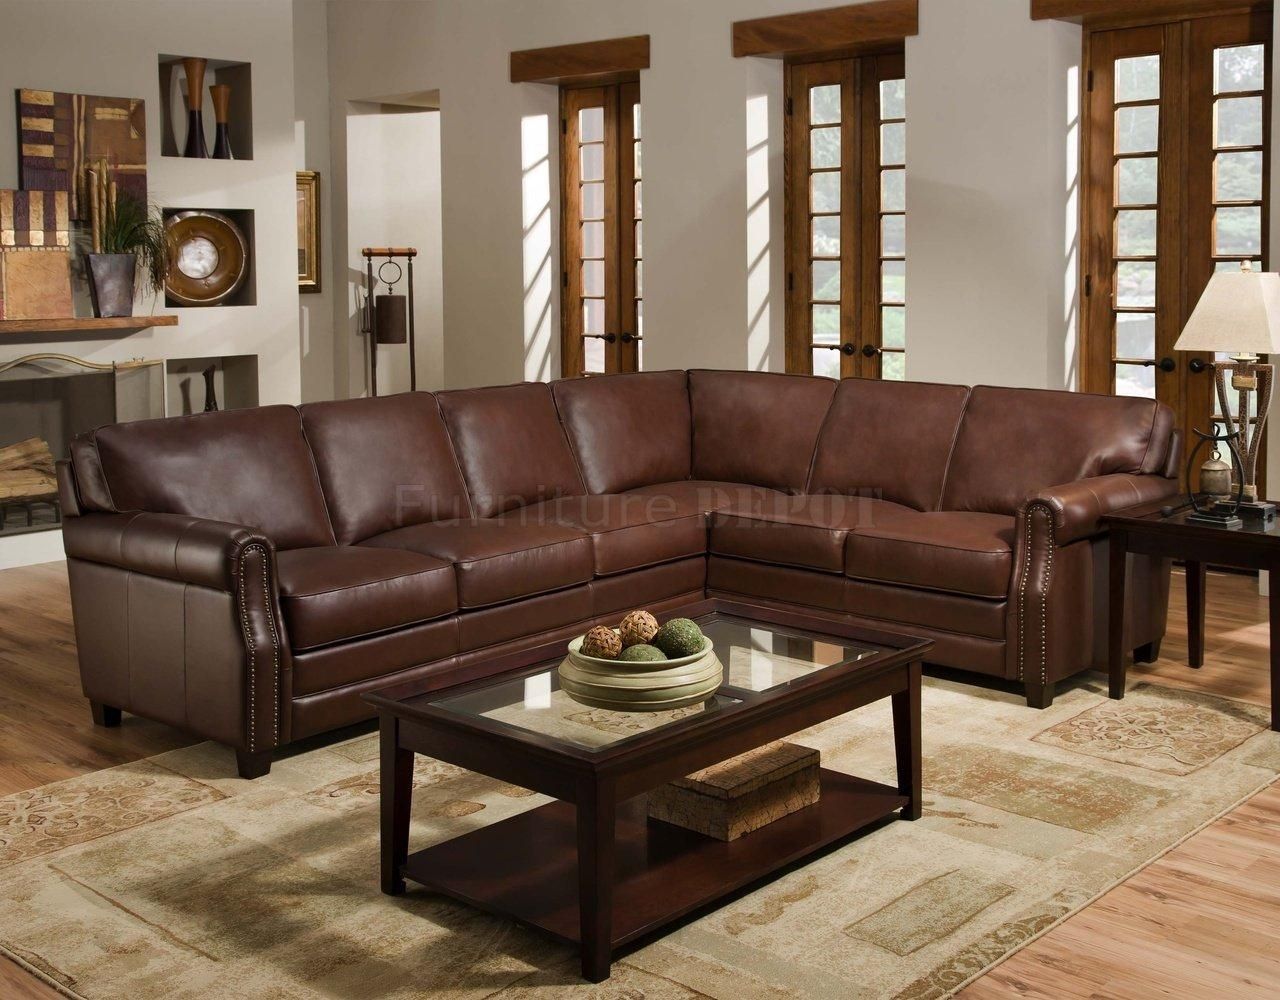 Cocoa Brown Top Grain Italian Leather Traditional Sectional Sofa With Traditional Sectional Sofas (View 2 of 20)